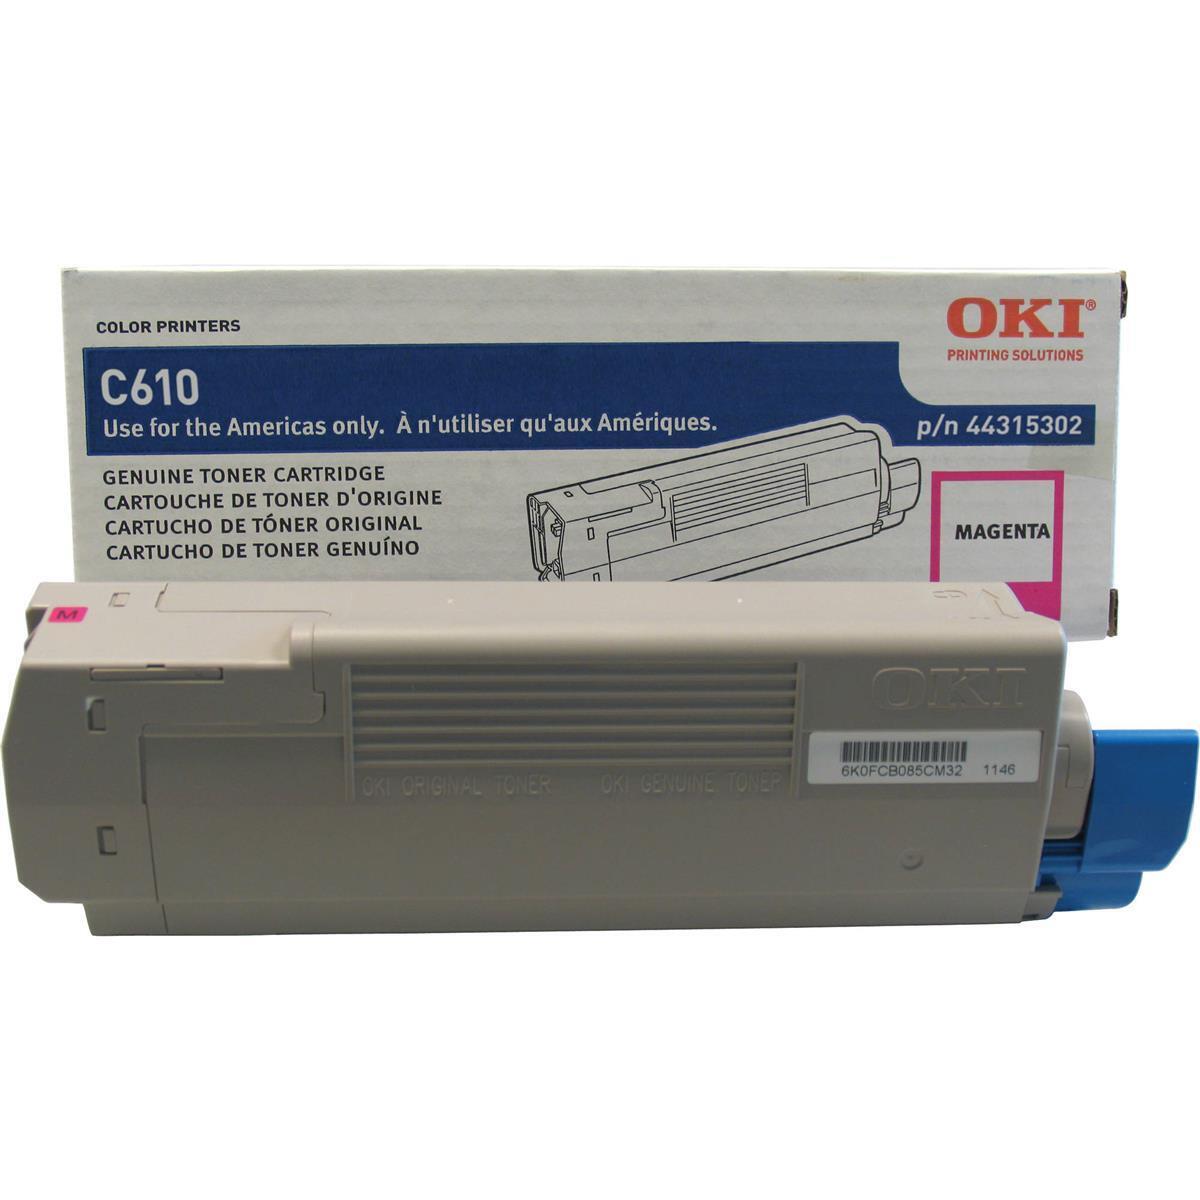 OKI Data 44315302 Magenta Toner Cartridge for C610